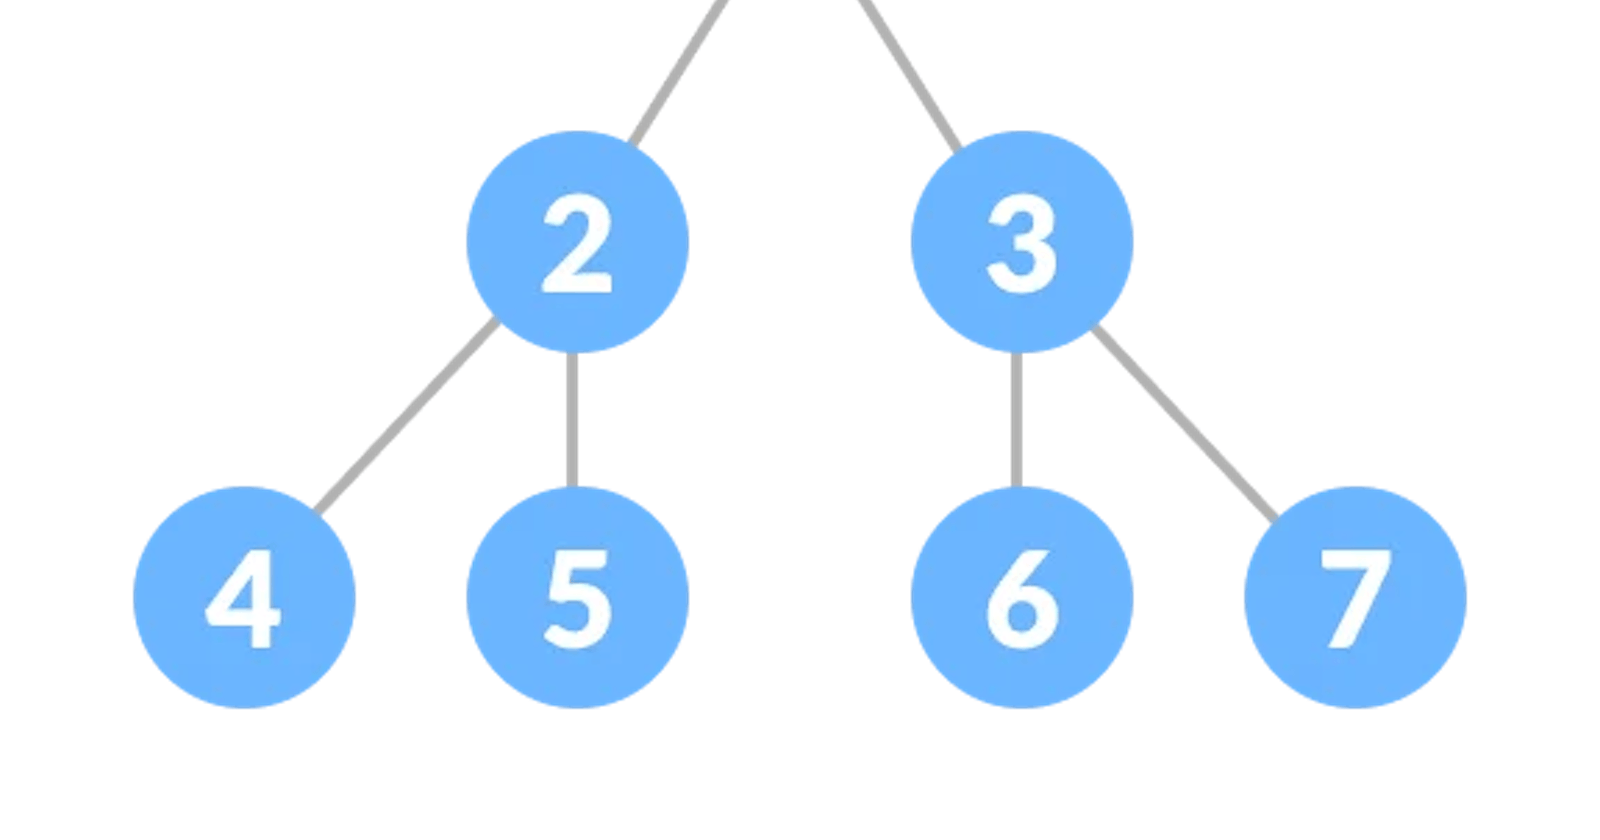 Types of Binary Trees